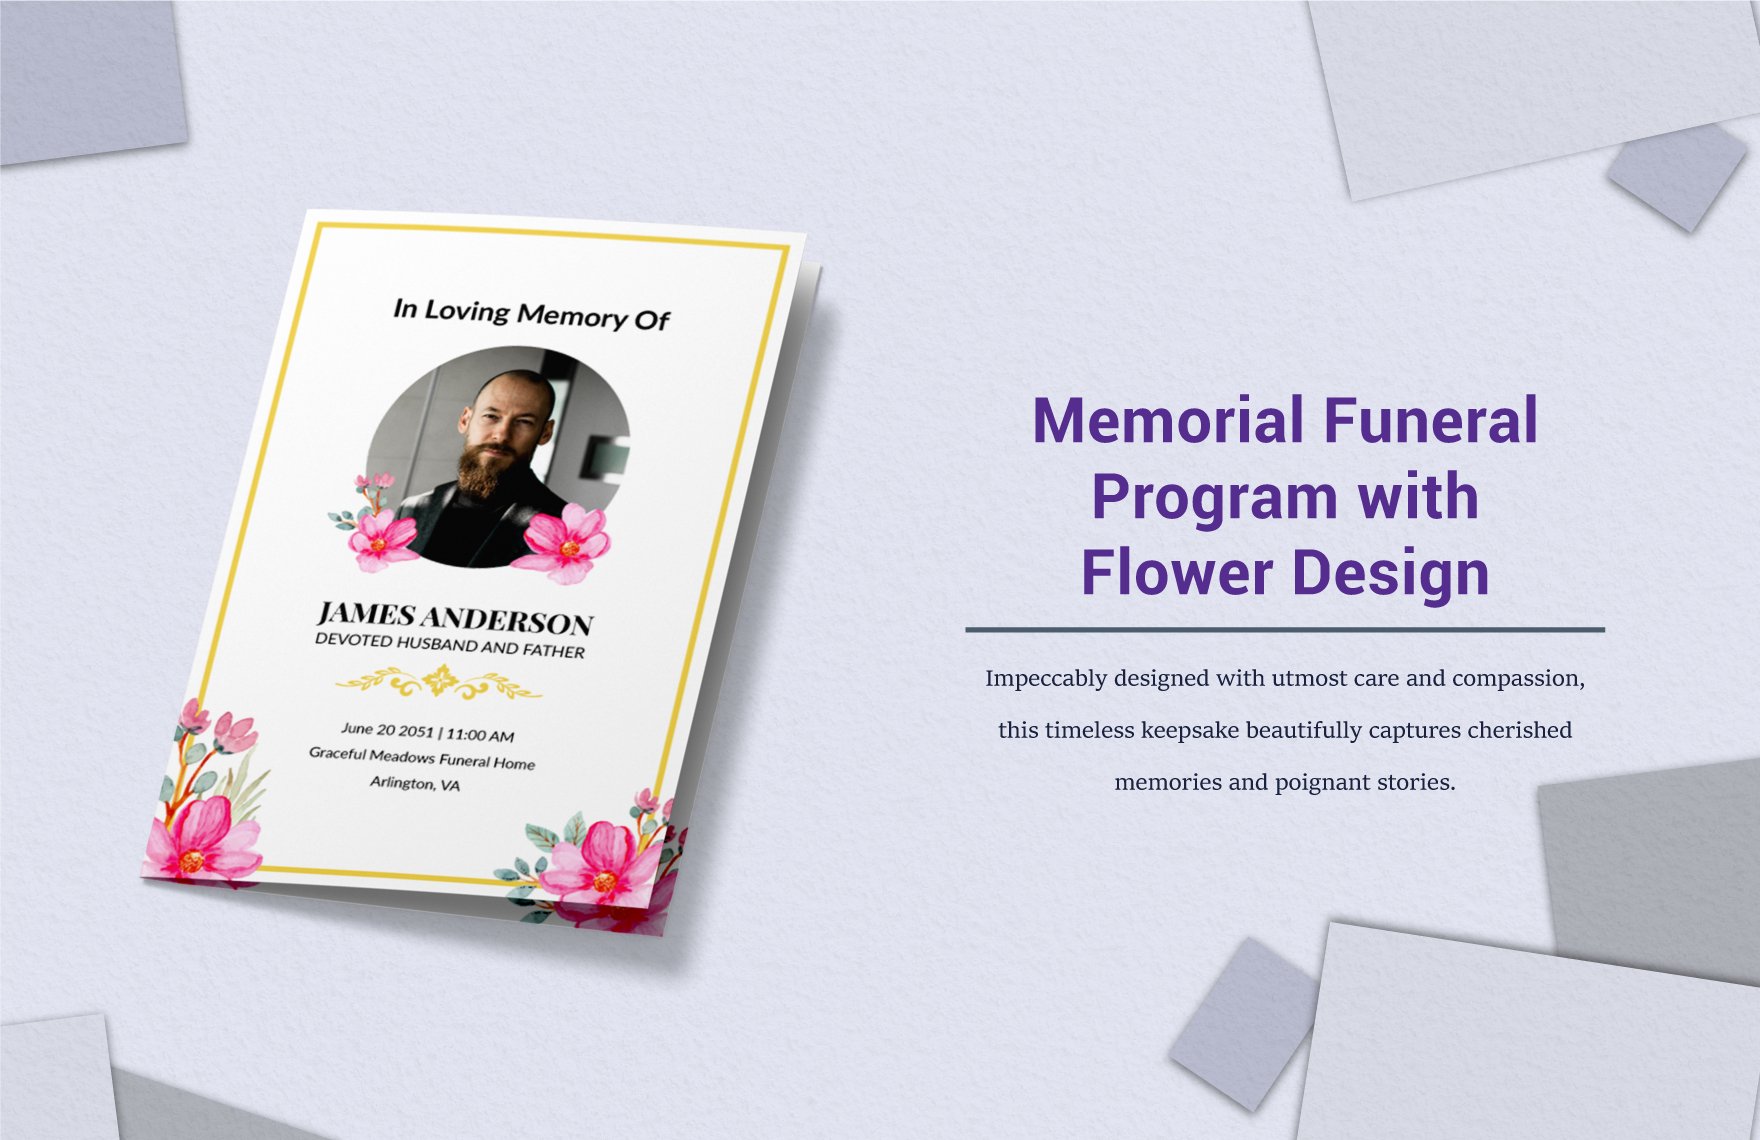 memorial funeral program with flower design